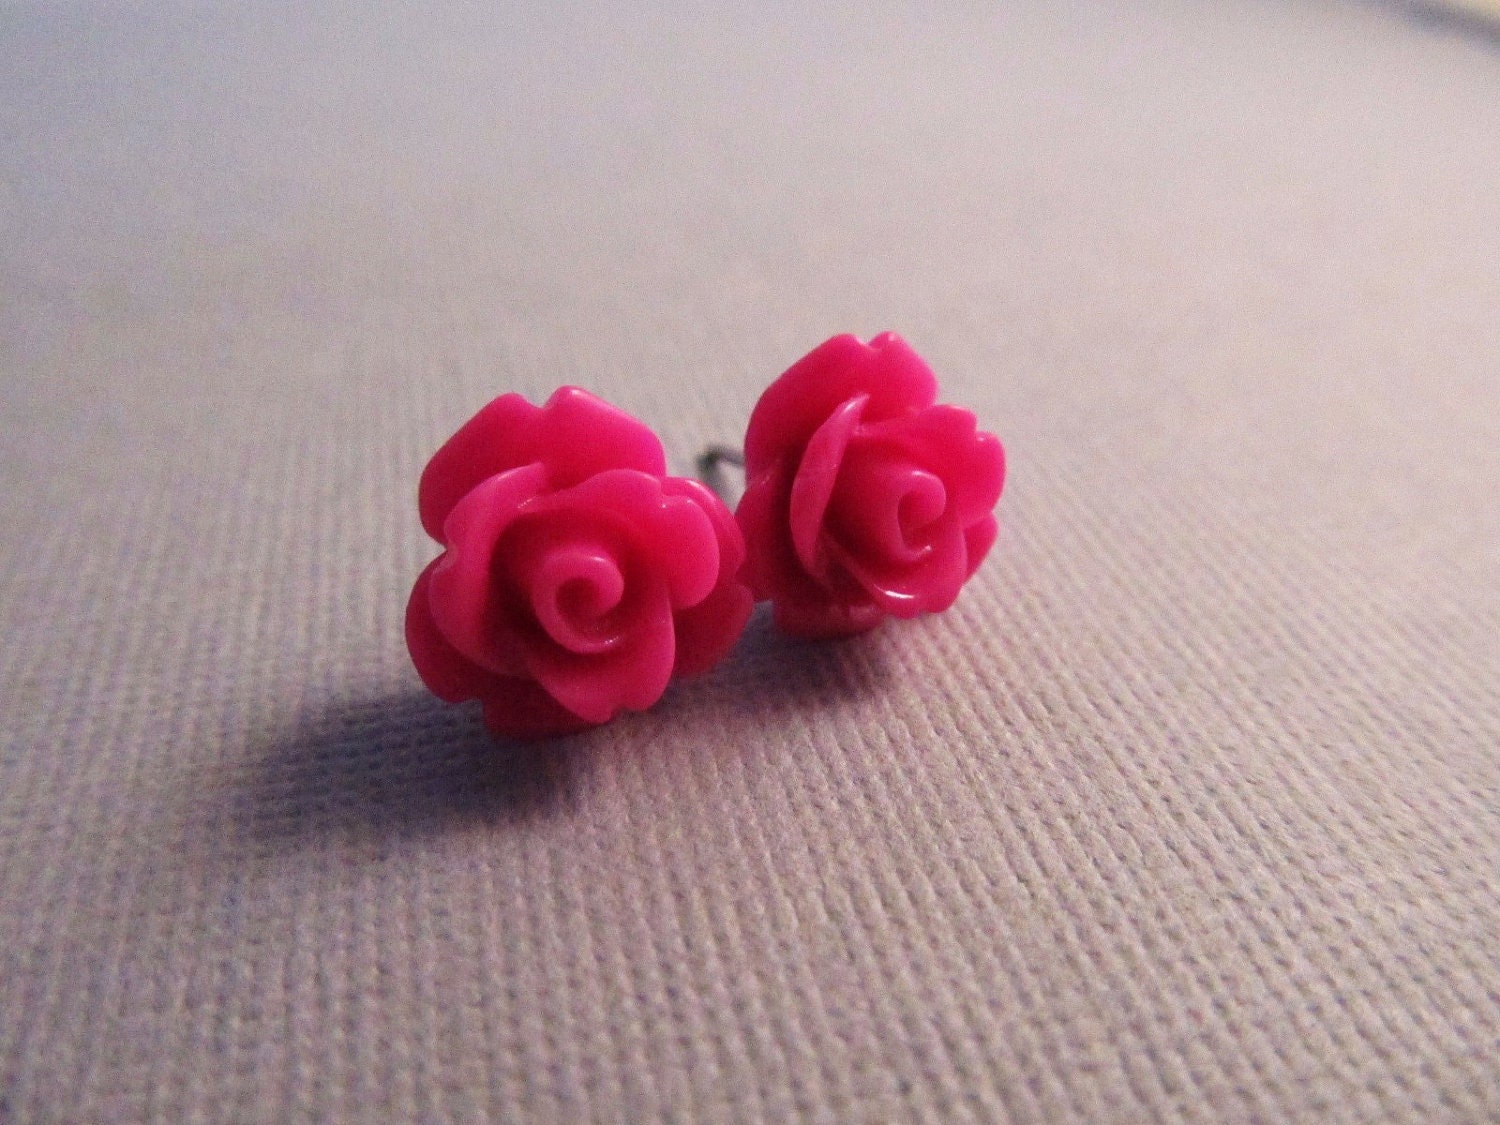 Hot Pink Rose Earrings Fuchsia Flowers on Stainless Steel | Etsy